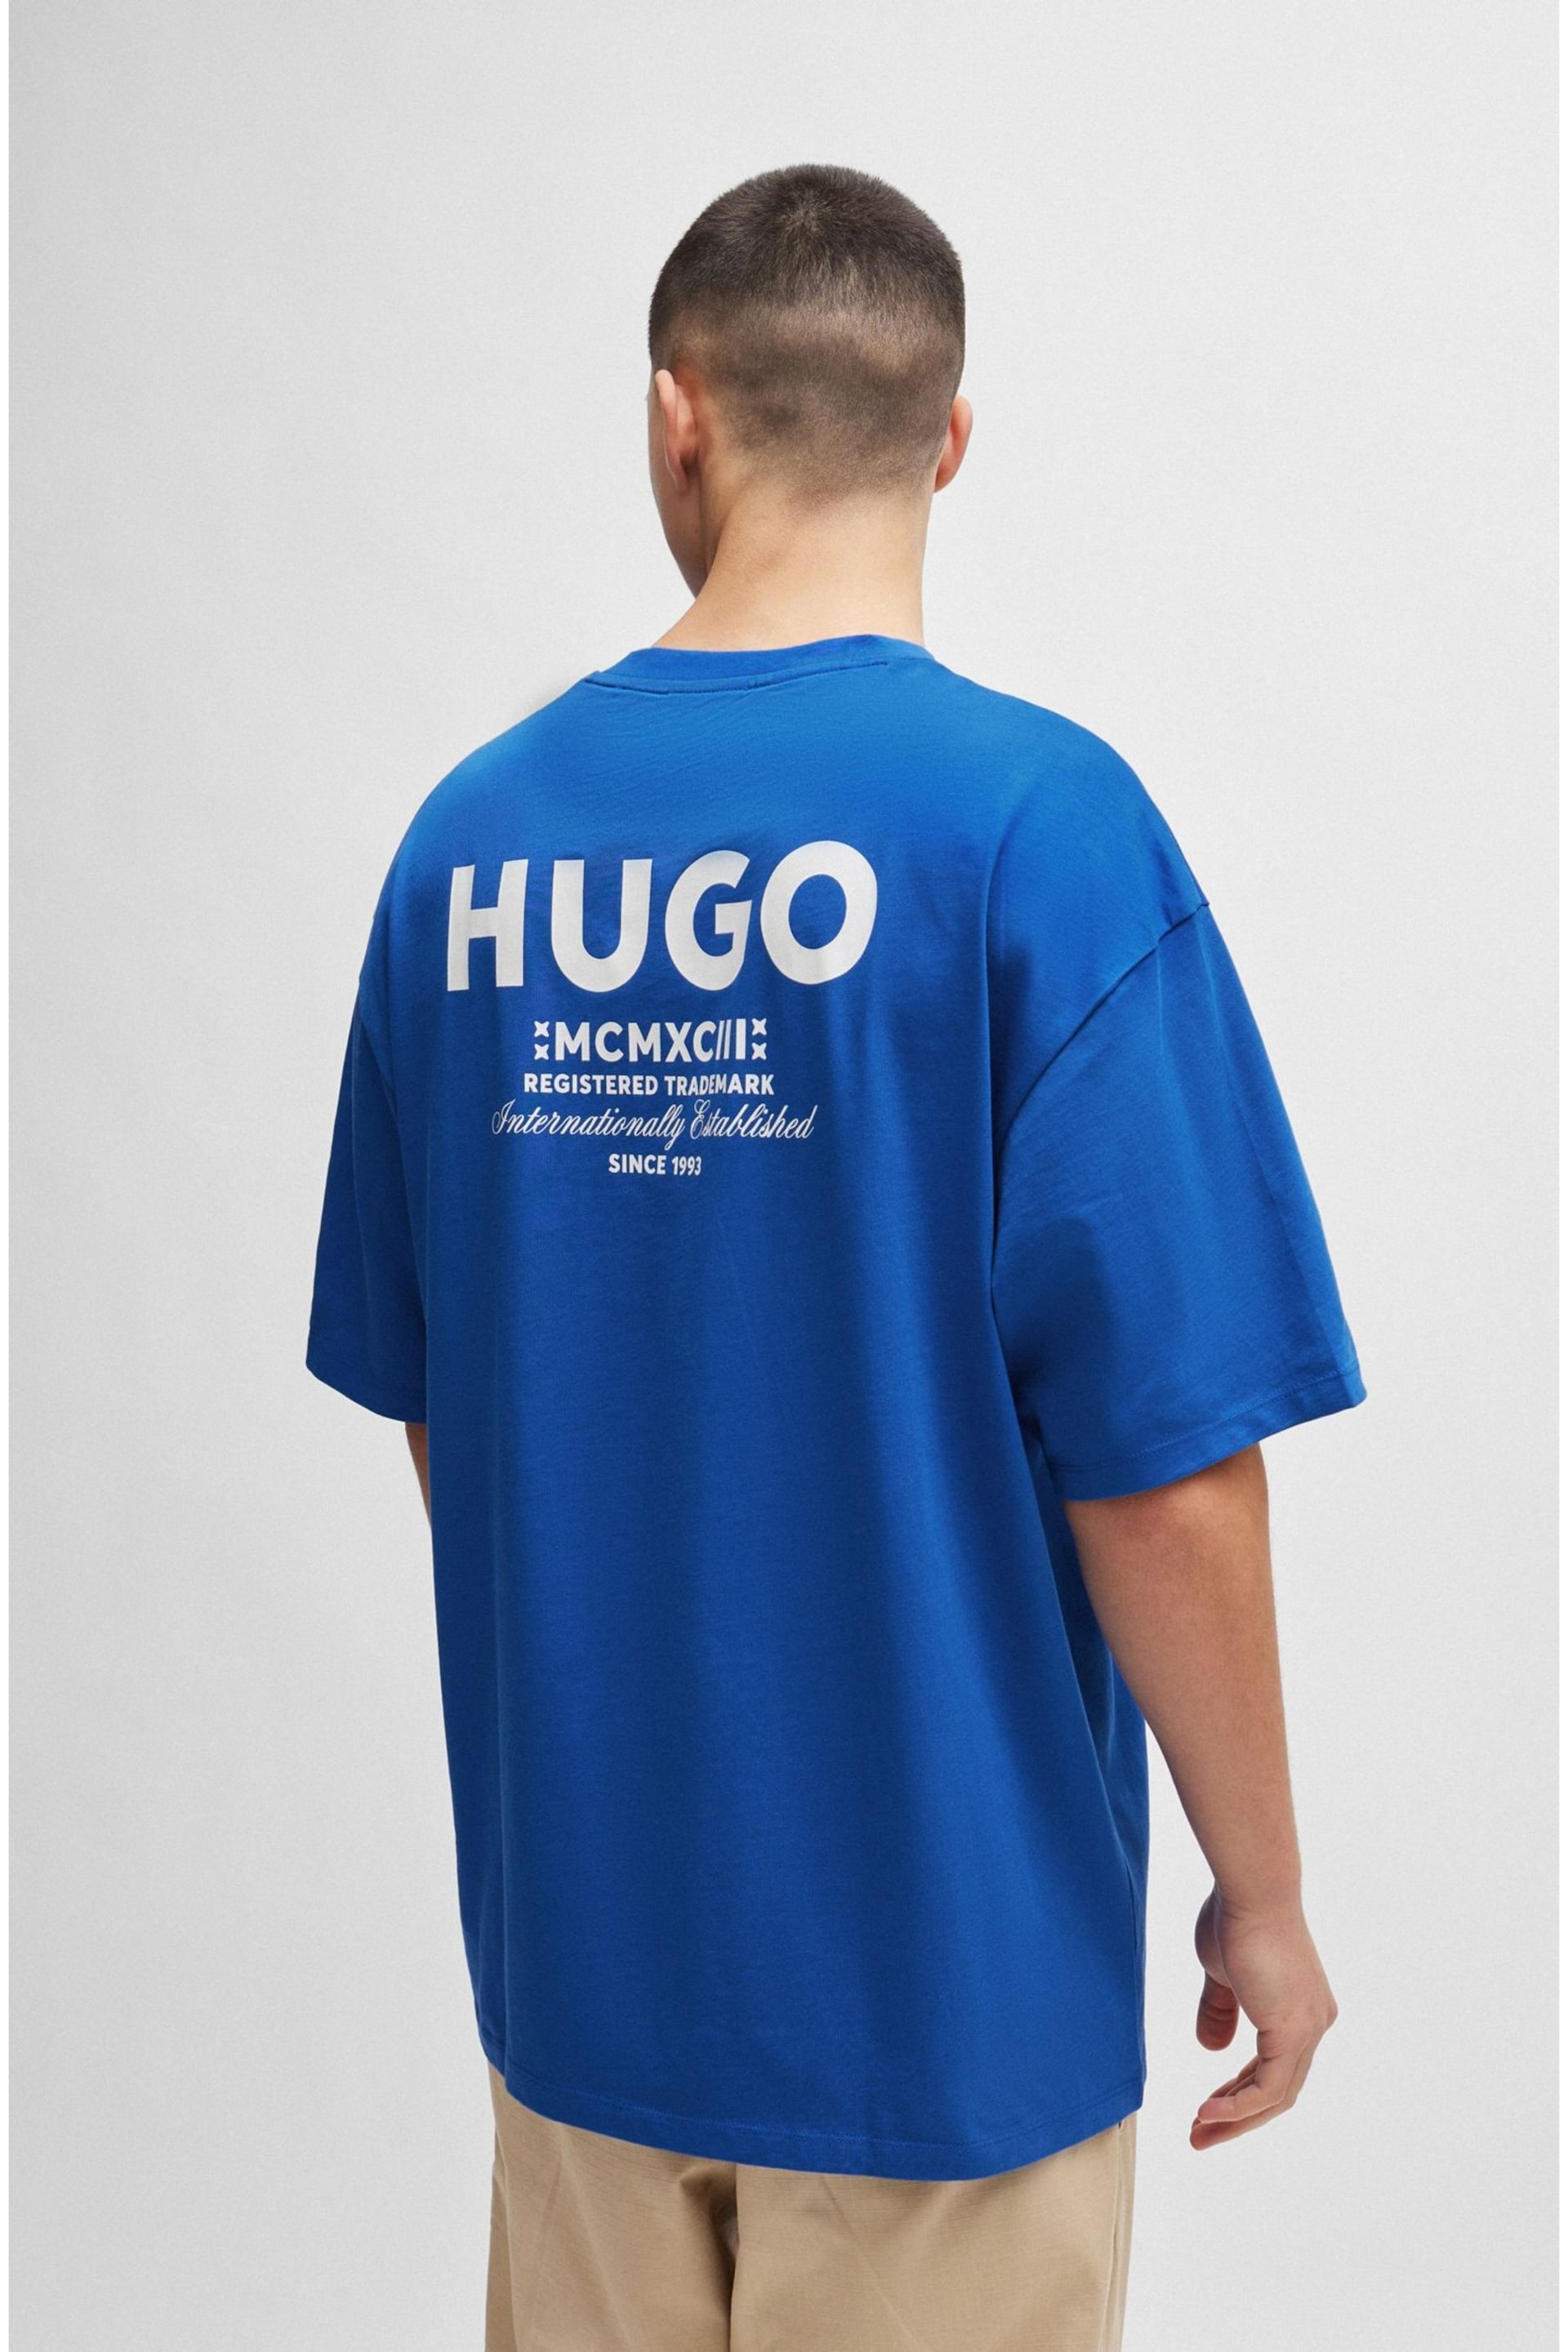 HUGO Blue Logo Graphic T-Shirt - Image 3 of 5